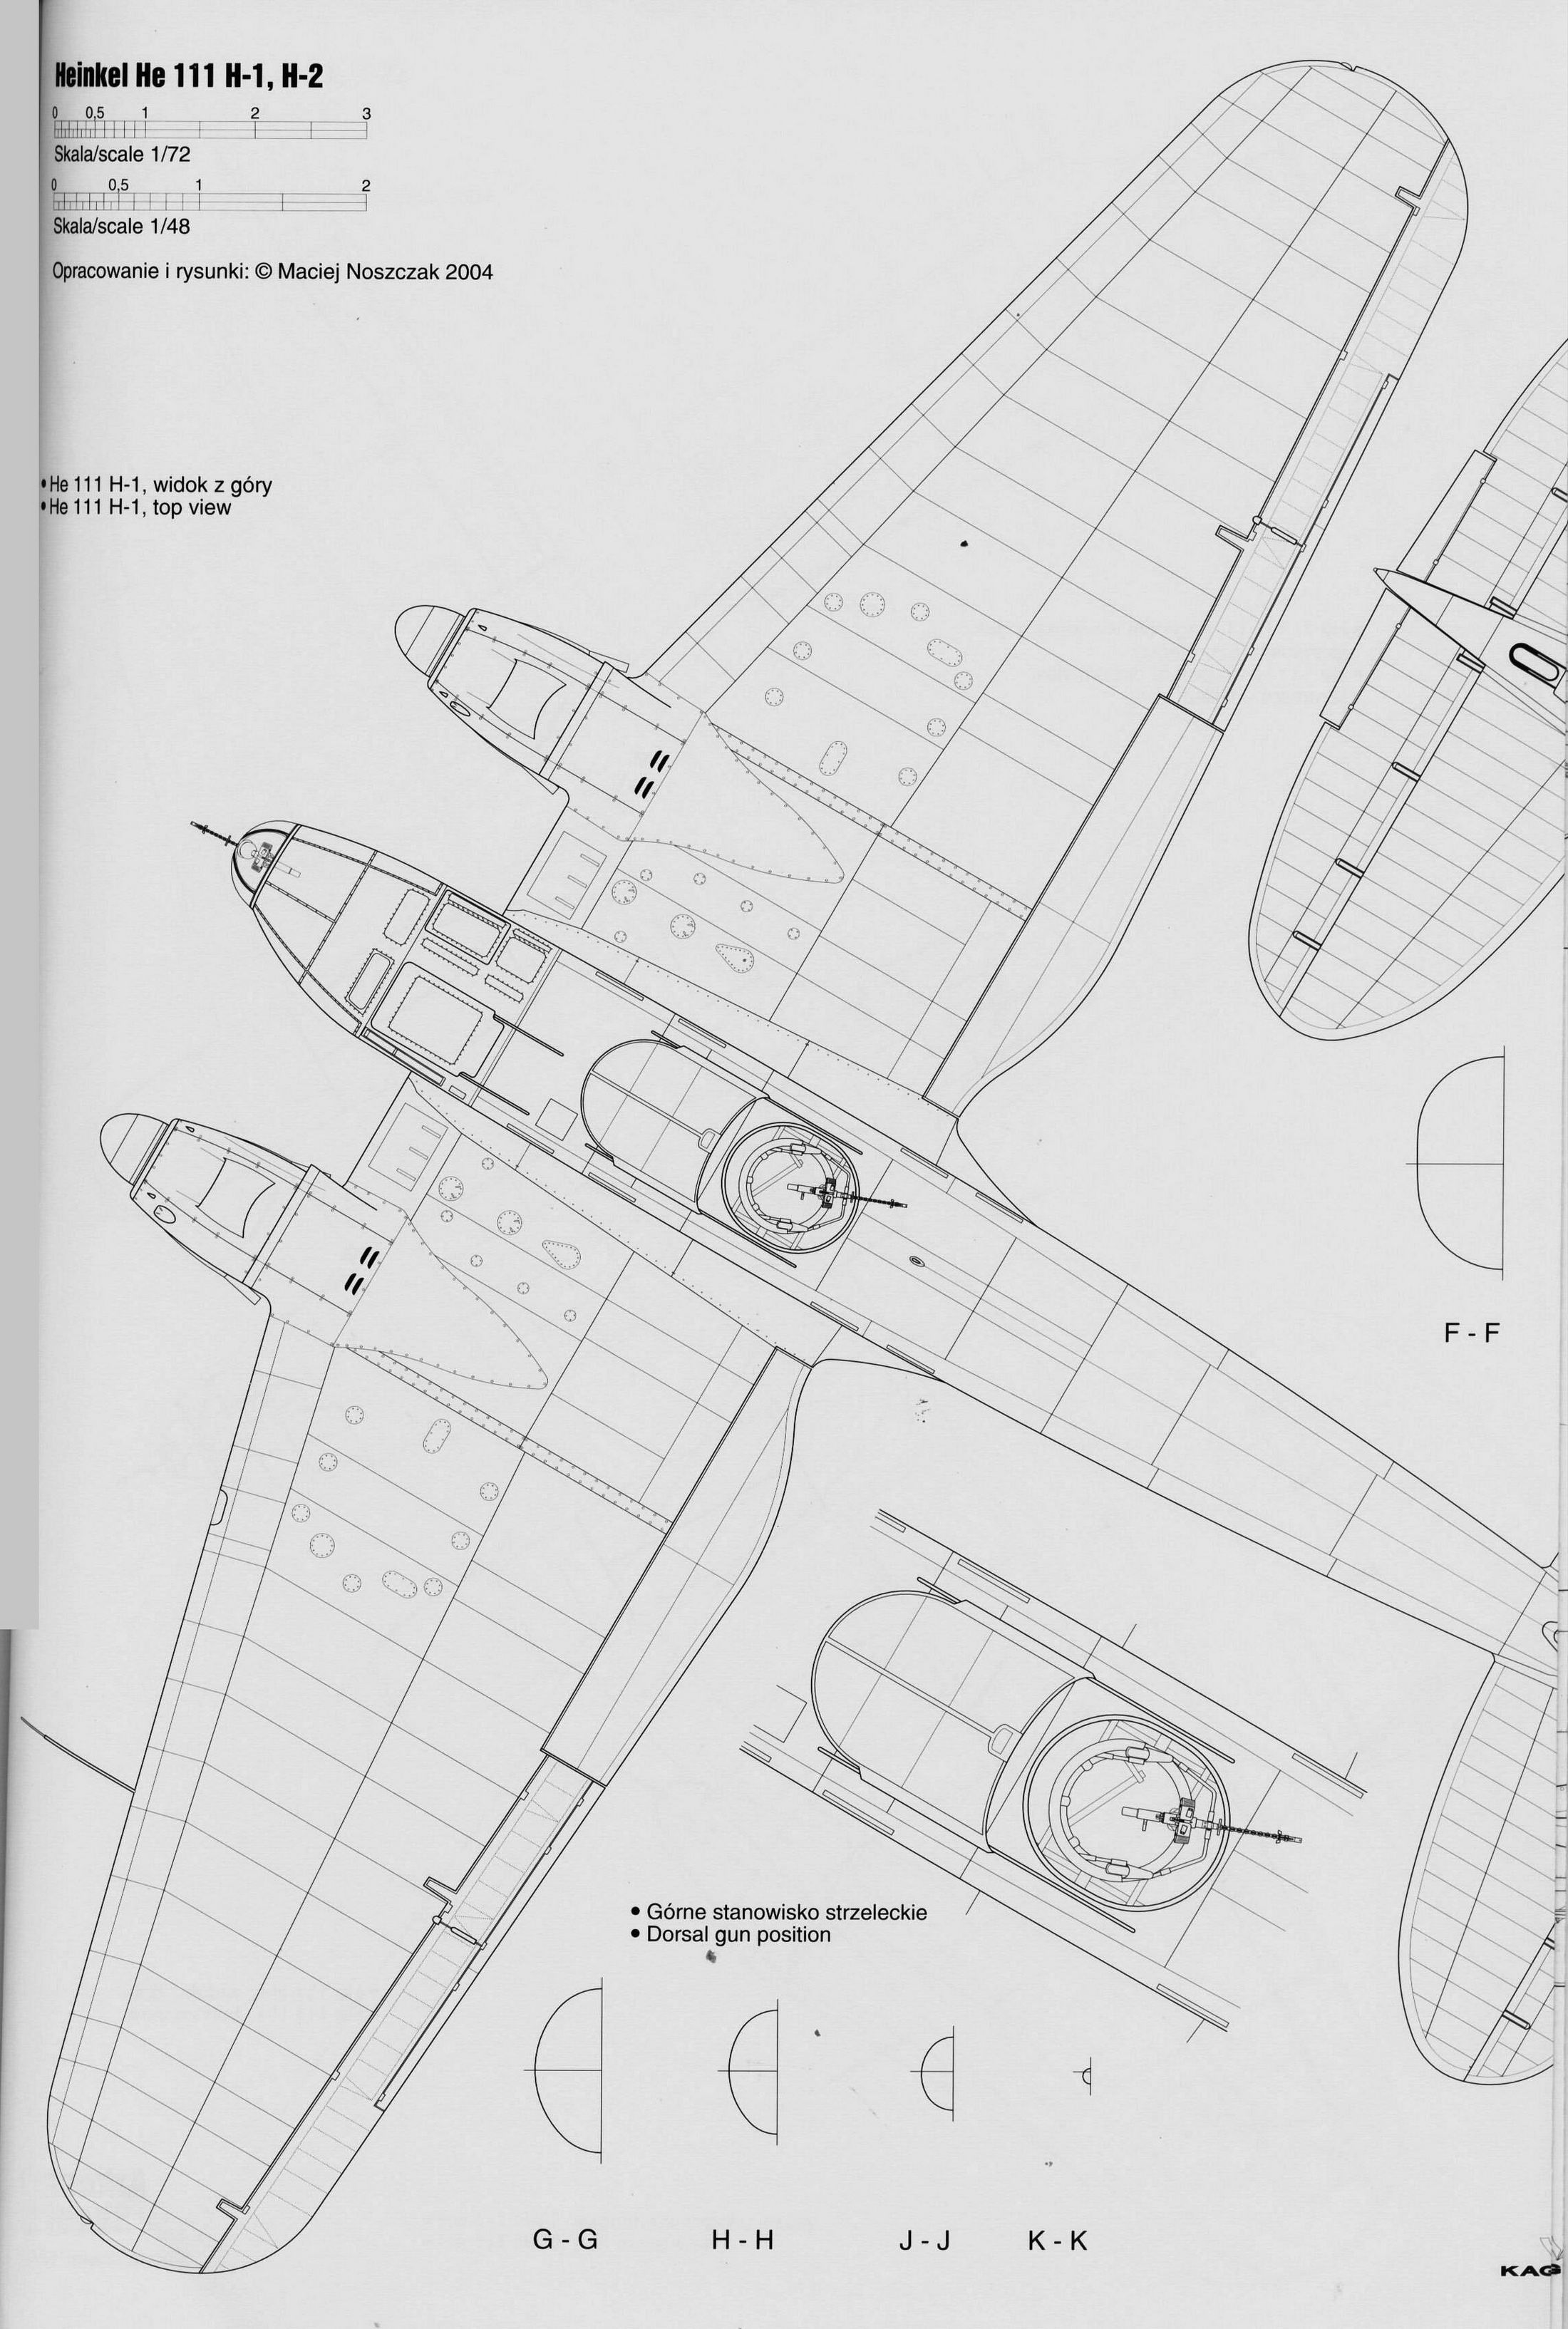 Artwork line drawing or blue print of a Heinkel He 111H scale 1 72 Arkusz 20